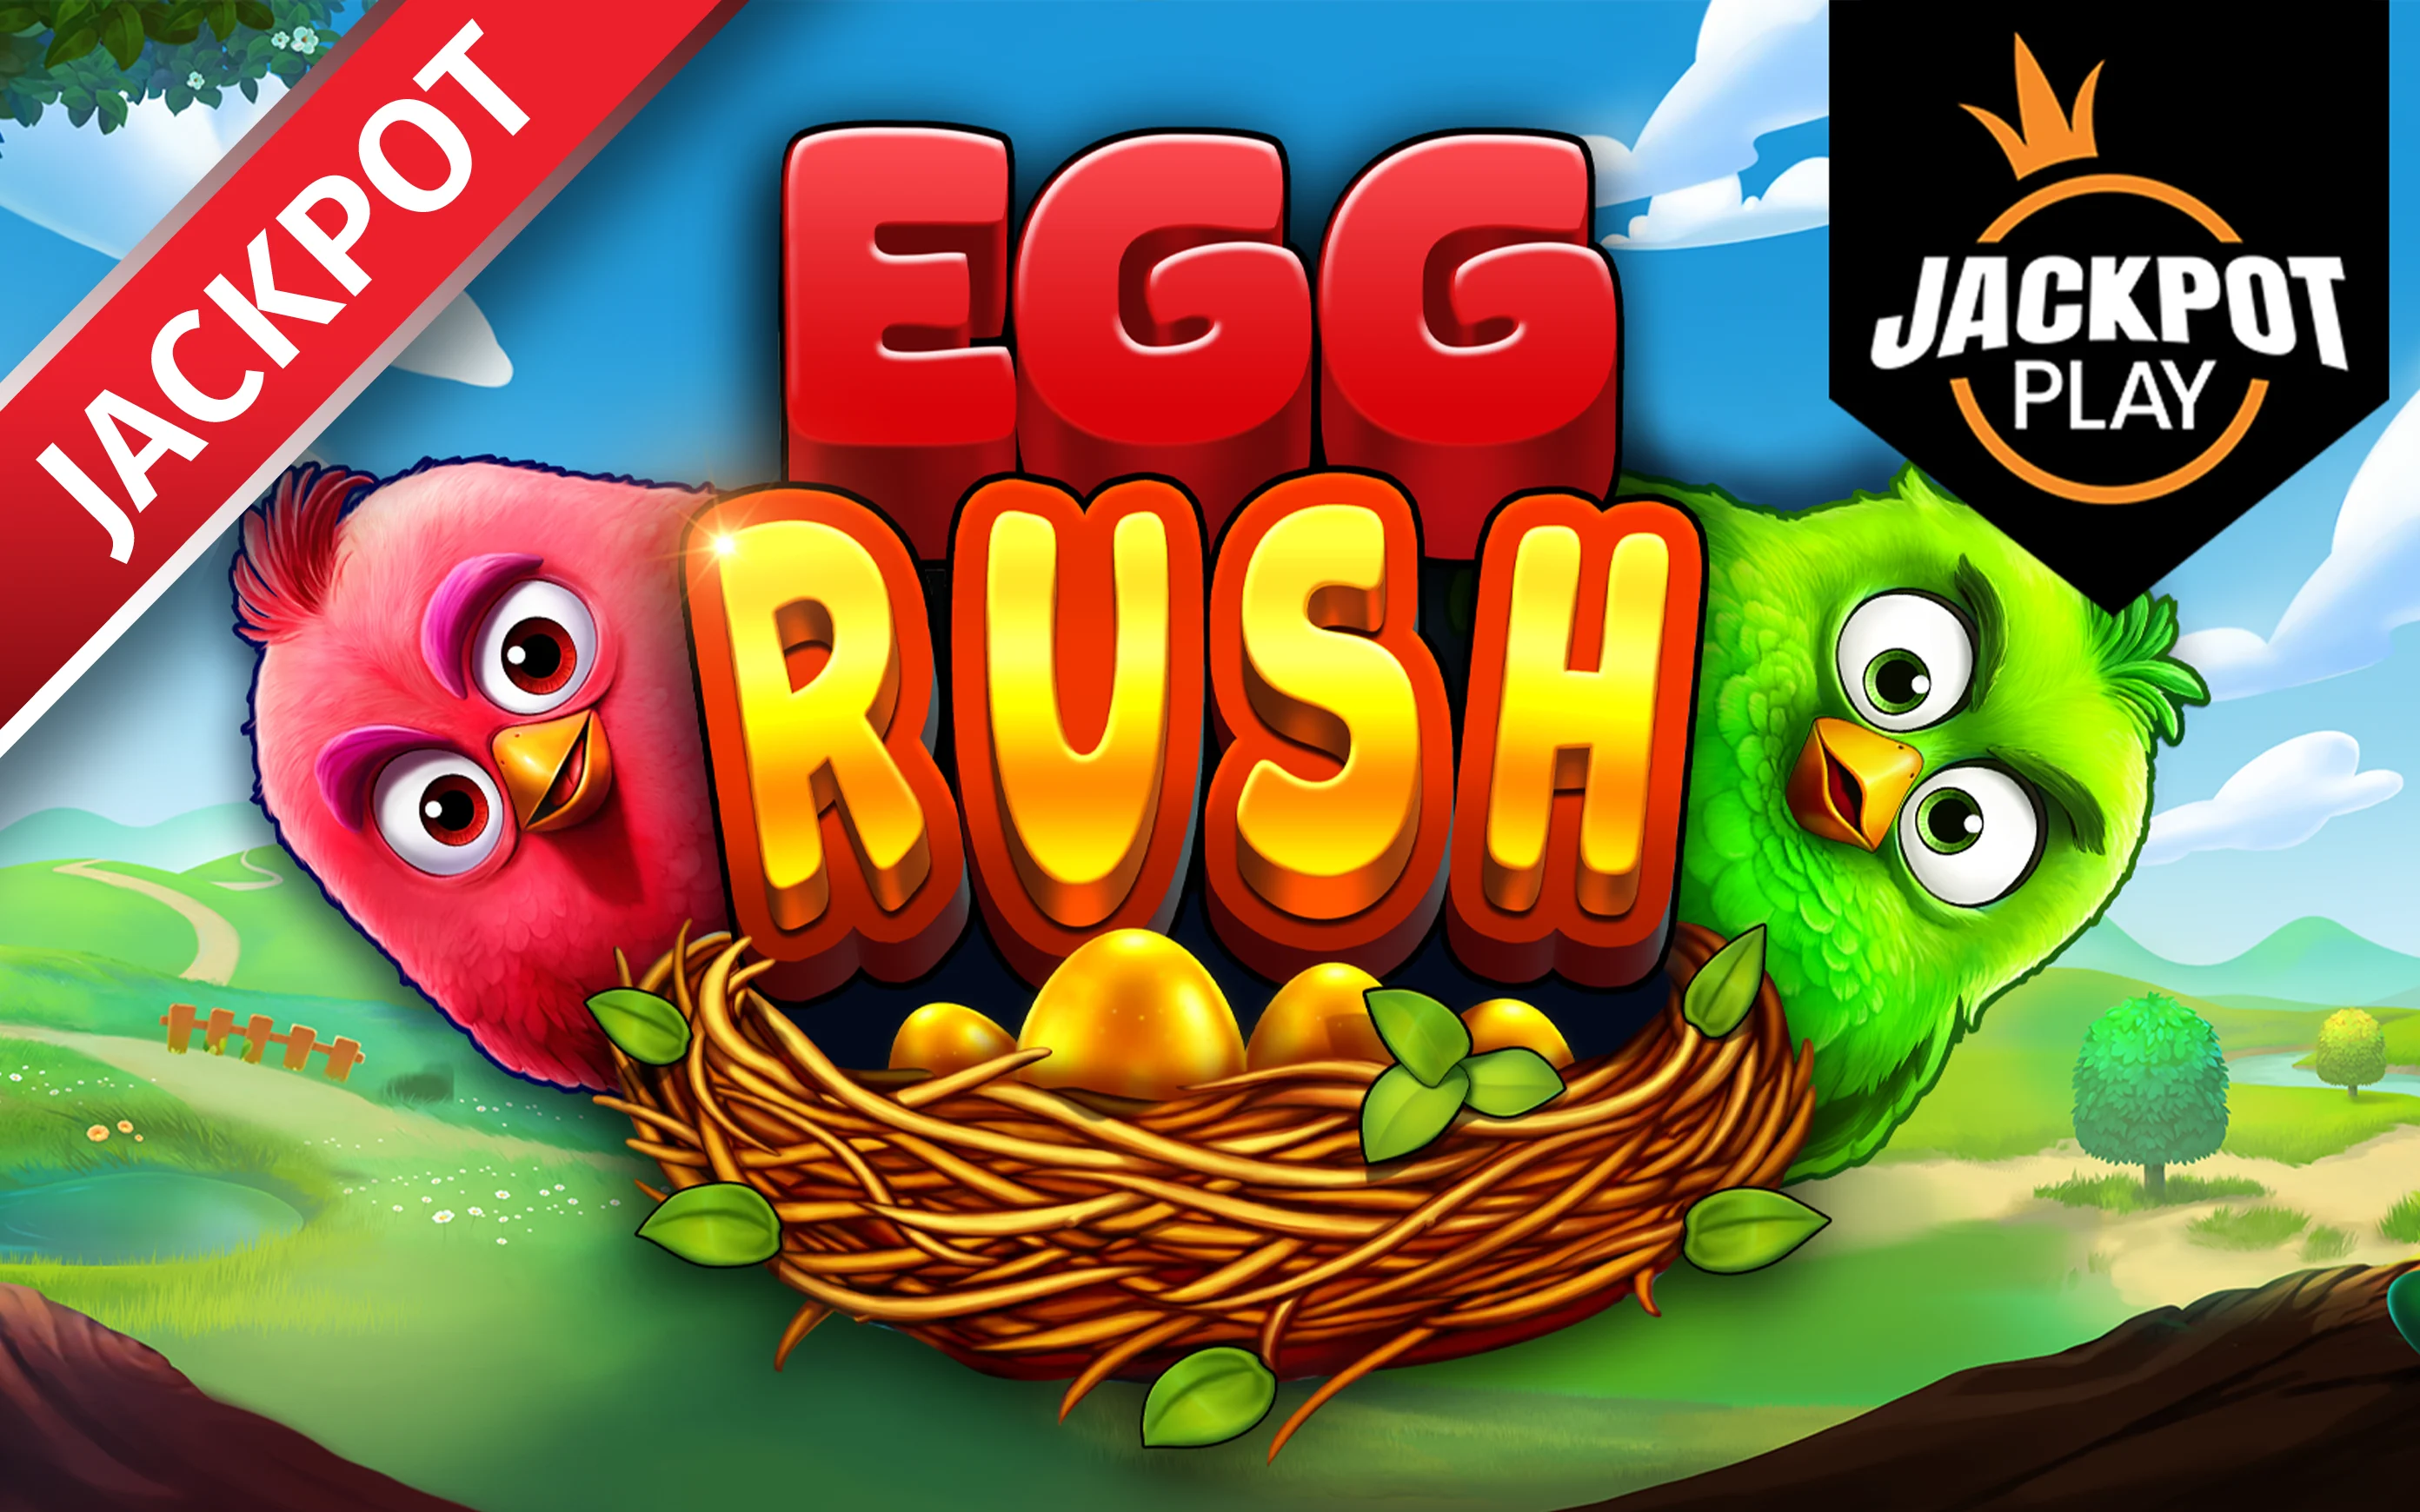 Gioca a Egg Rush Jackpot Play sul casino online Starcasino.be